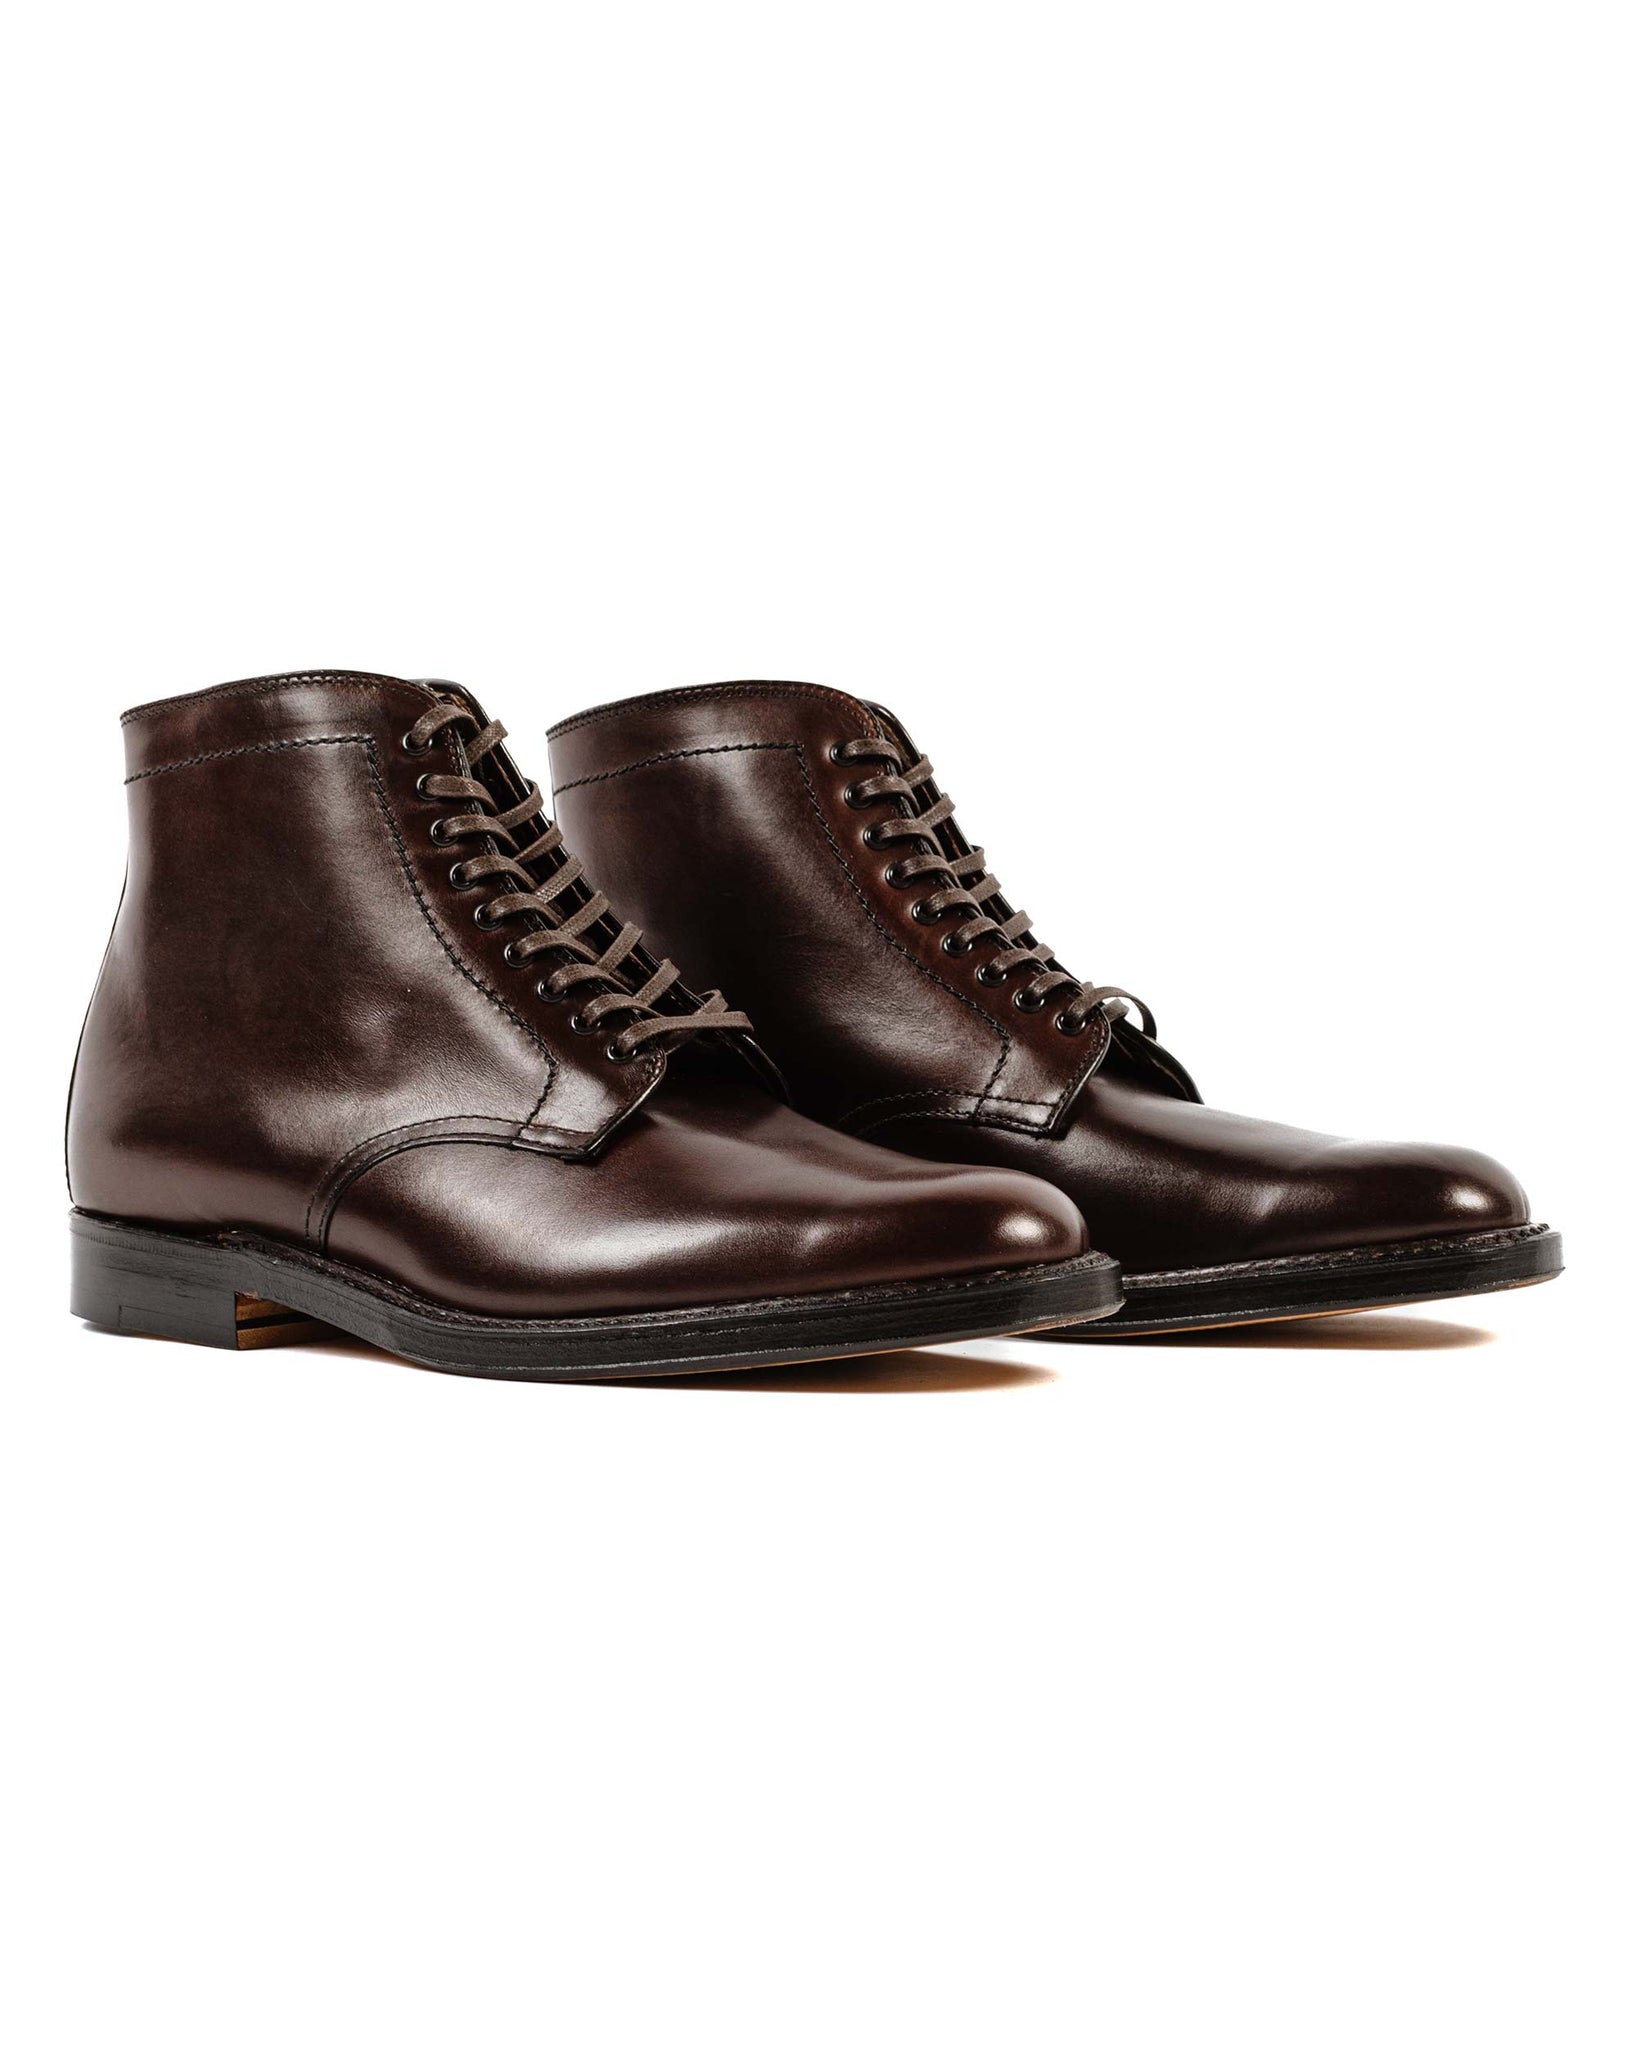 Alden Plain Toe Boot Dark Brown Calfskin G2804 Side